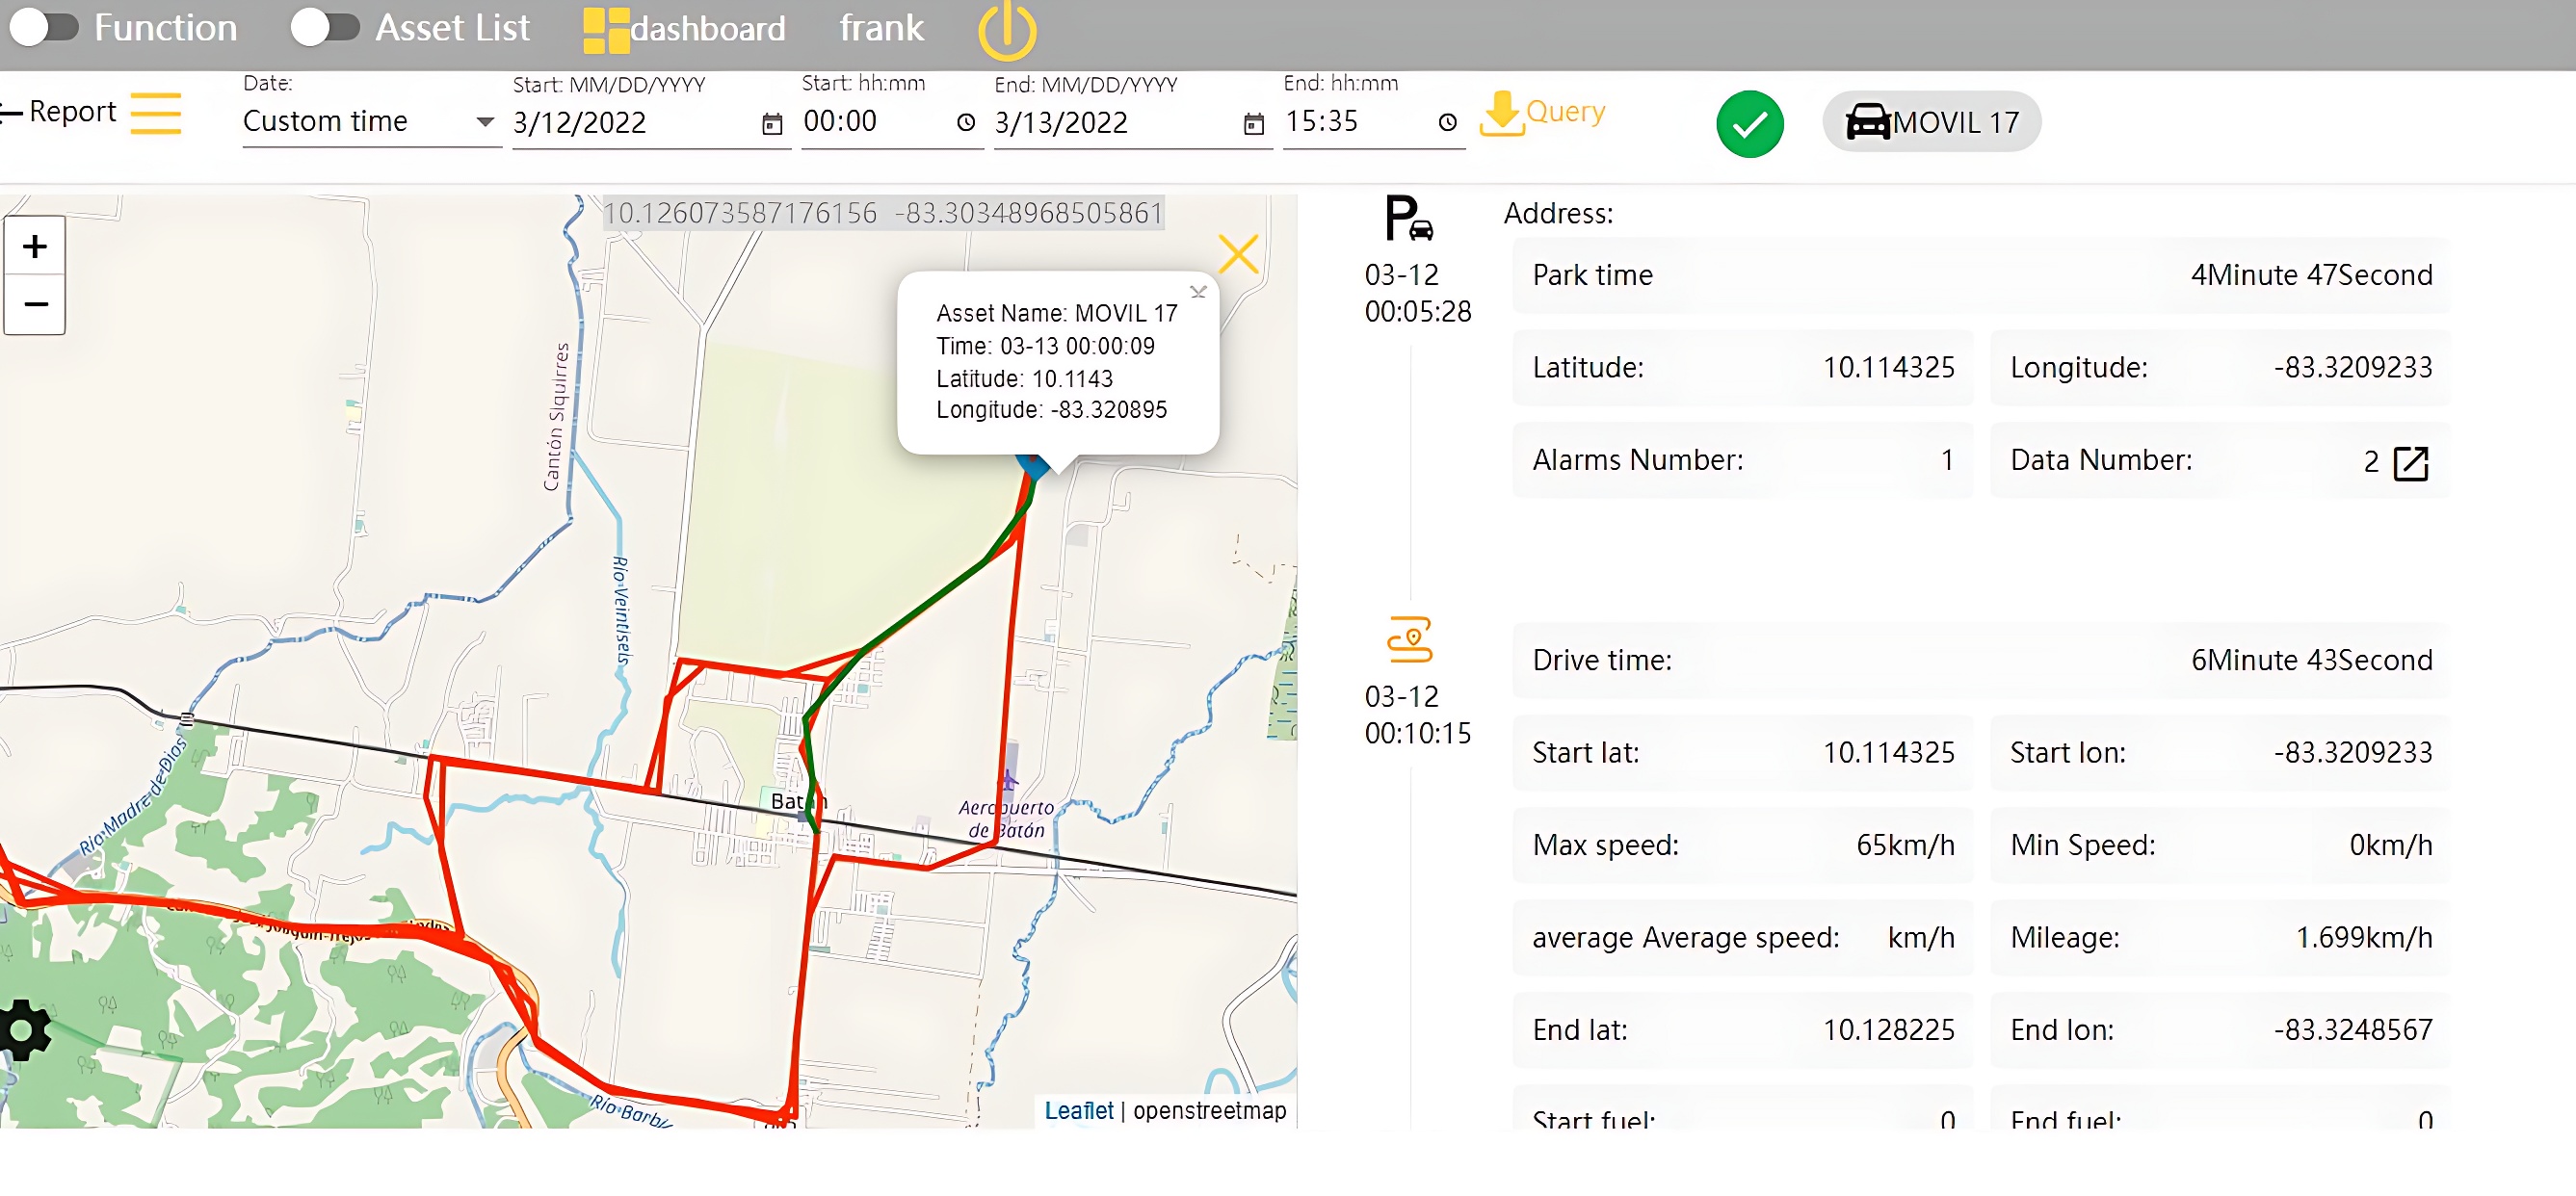 driving parking timeline tracking software